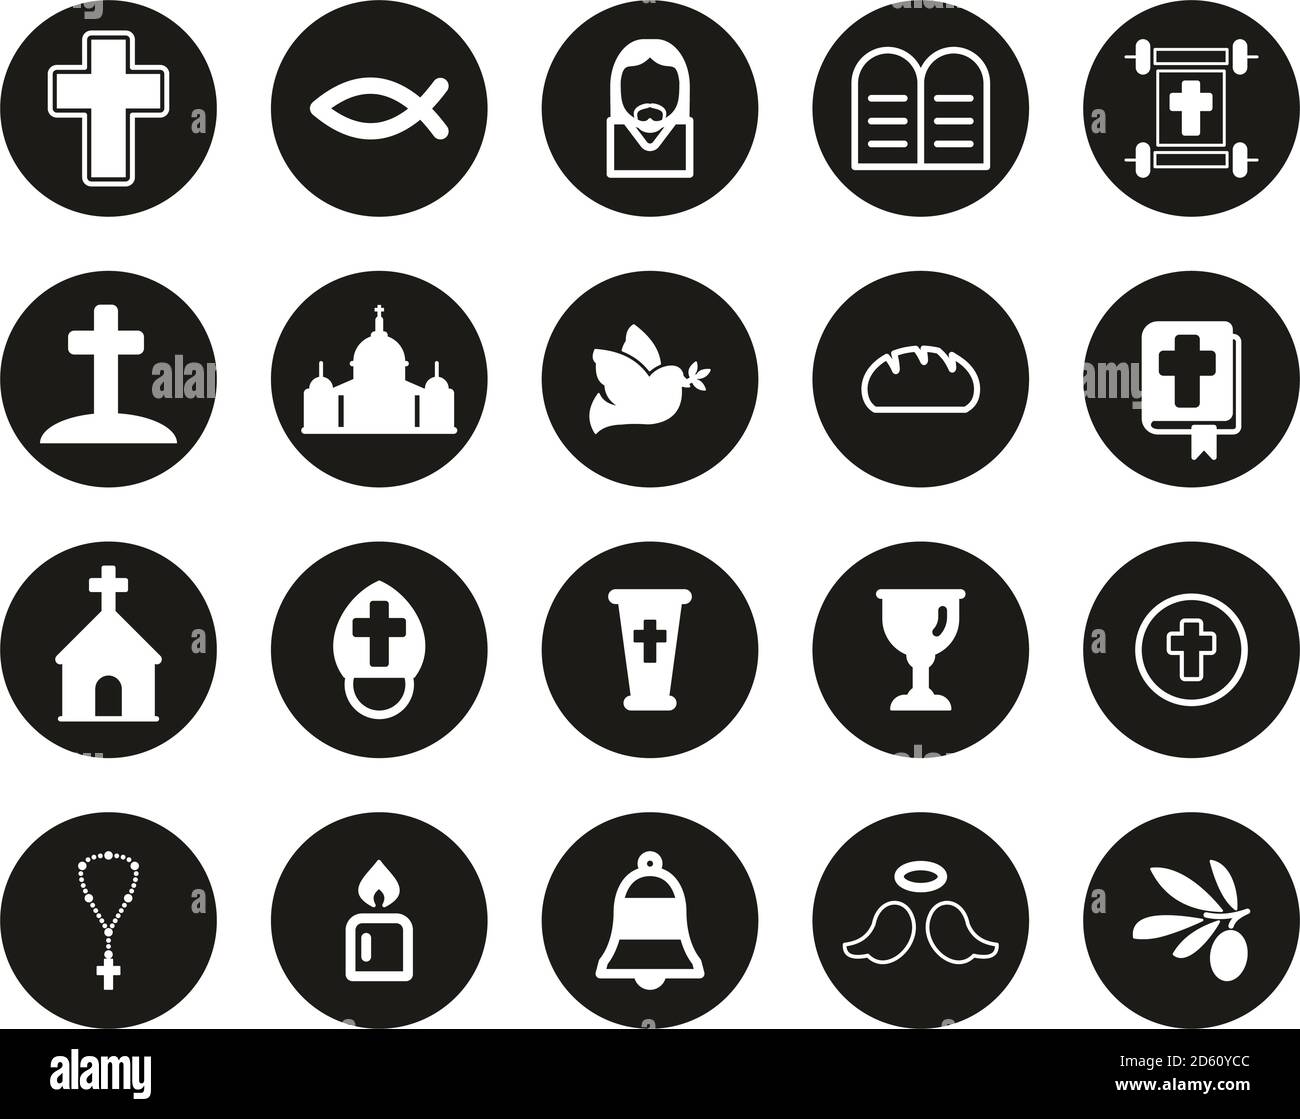 Christianity Religion & Religious Items Icons White On Black Flat Design Circle Set Big Stock Vector